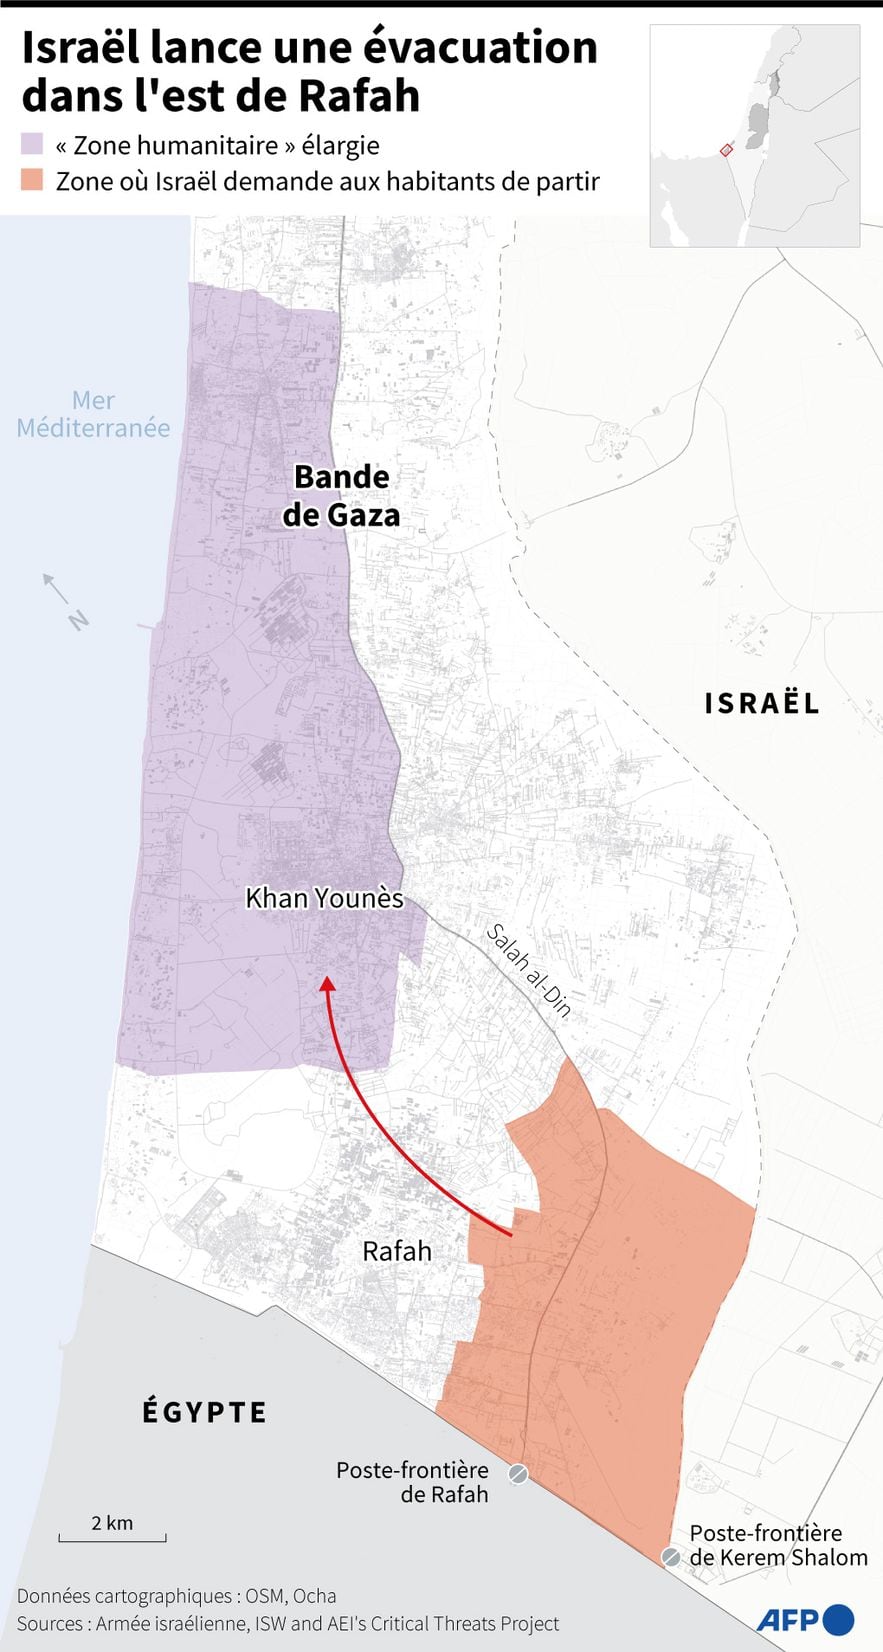 Israel launches evacuation in eastern Rafah.